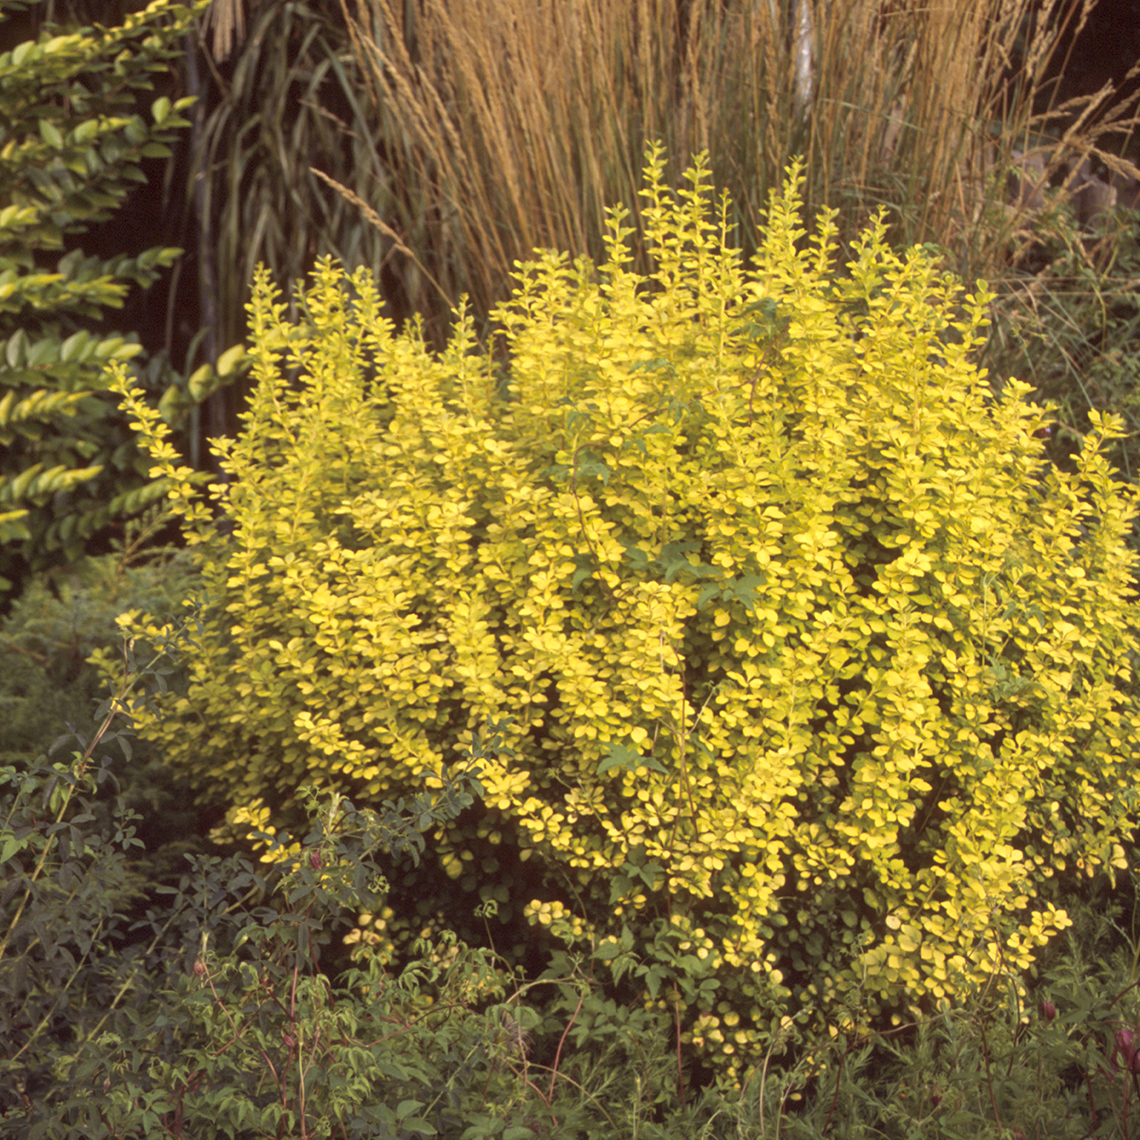 Berberis Aurea with bright yellow foliage in landscape